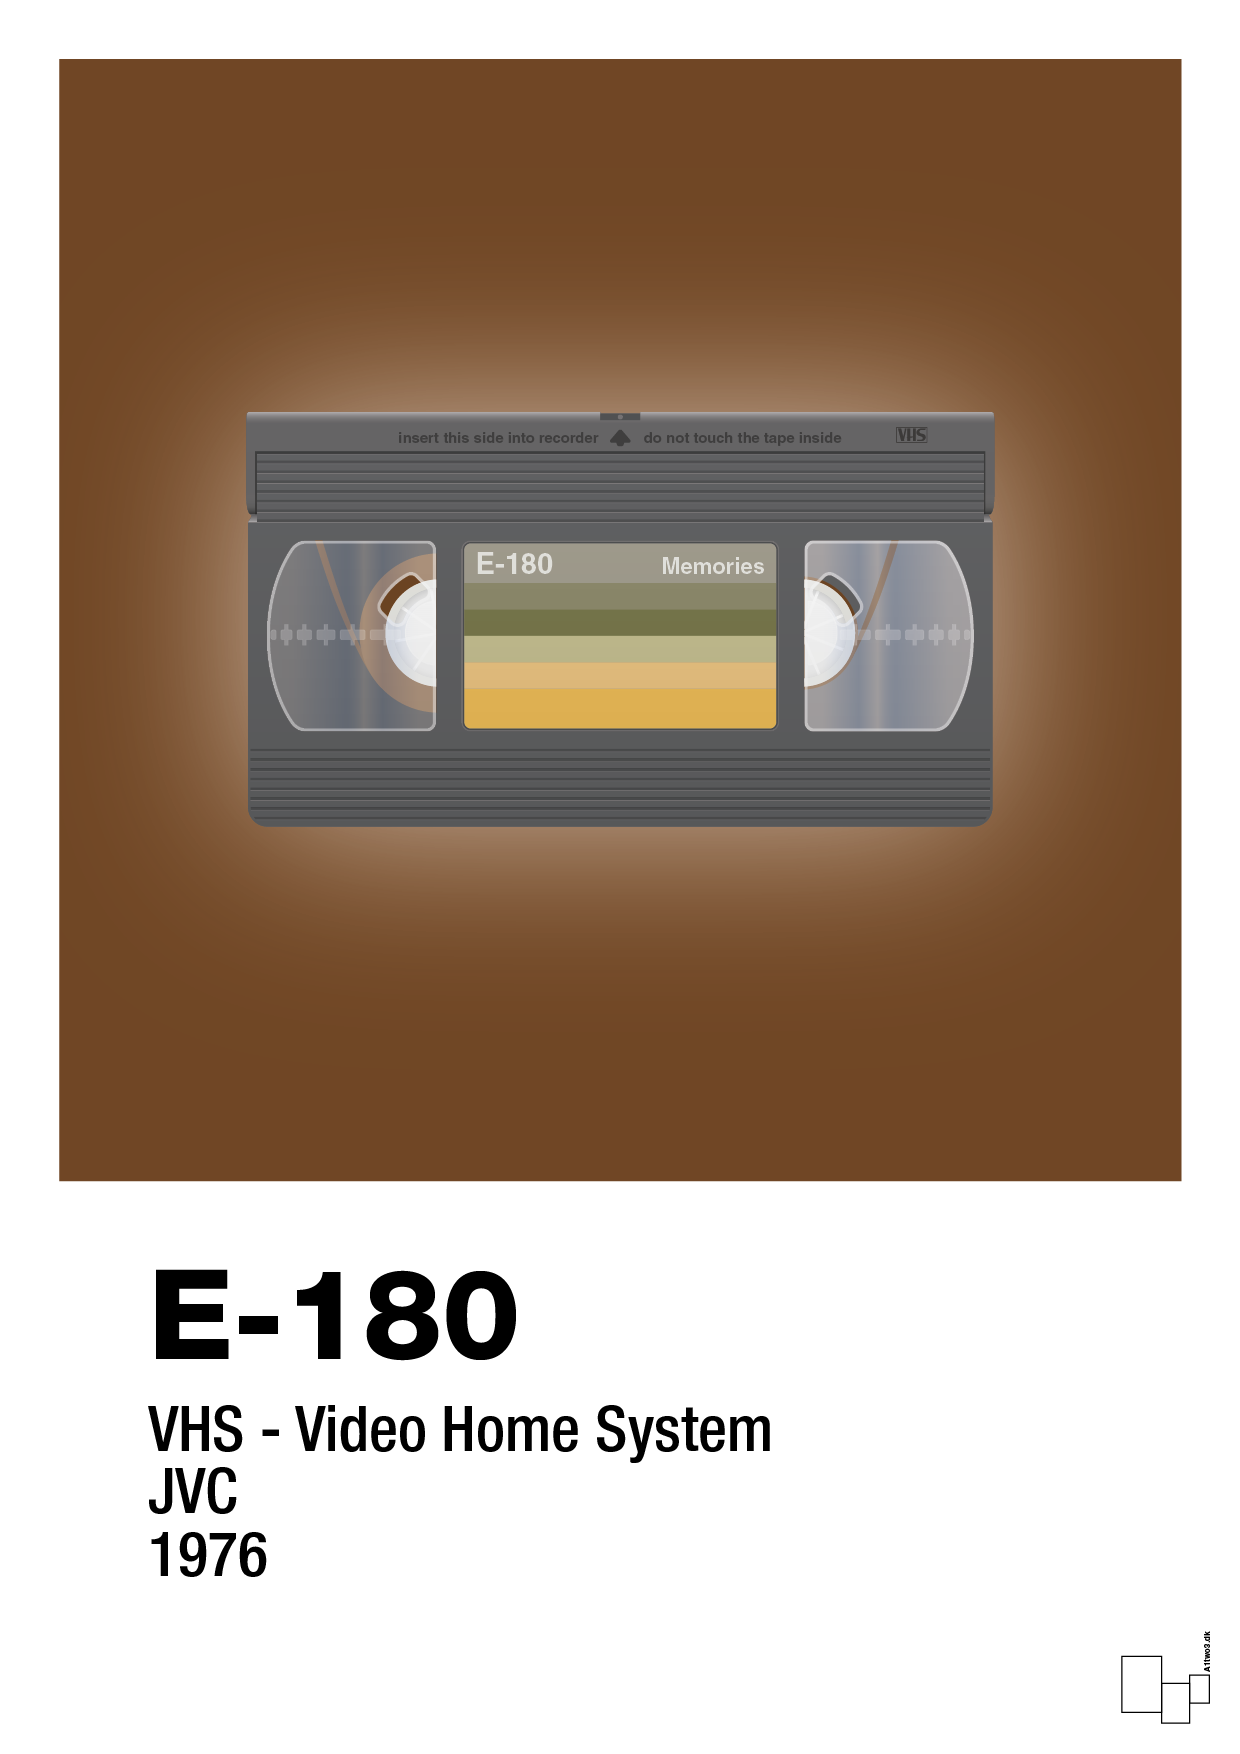 videobånd e-180 - Plakat med Grafik i Dark Brown